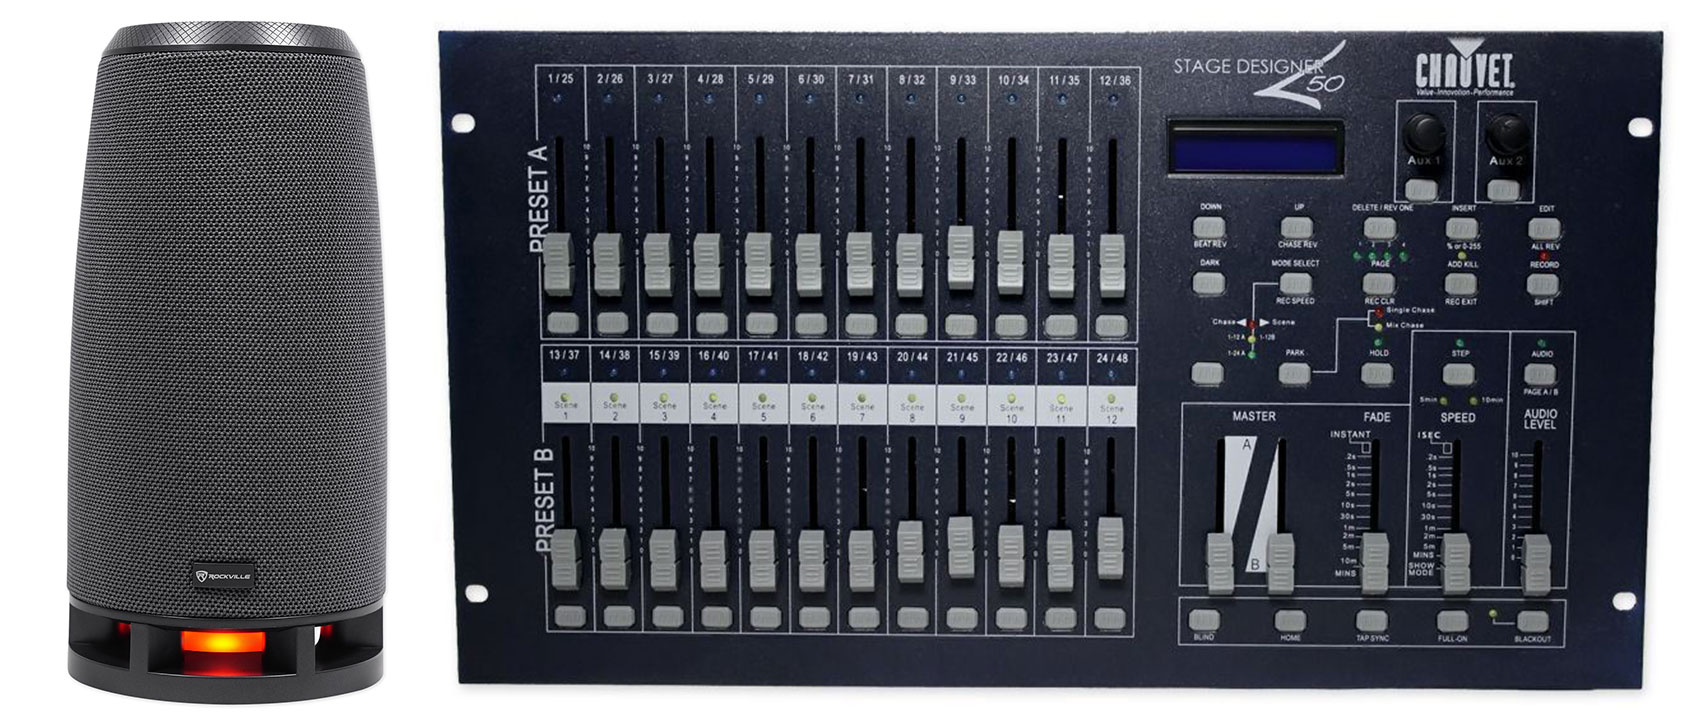 Chauvet DJ STAGE DESIGNER 50 48 Channel DMX-512 Dimmer Controller